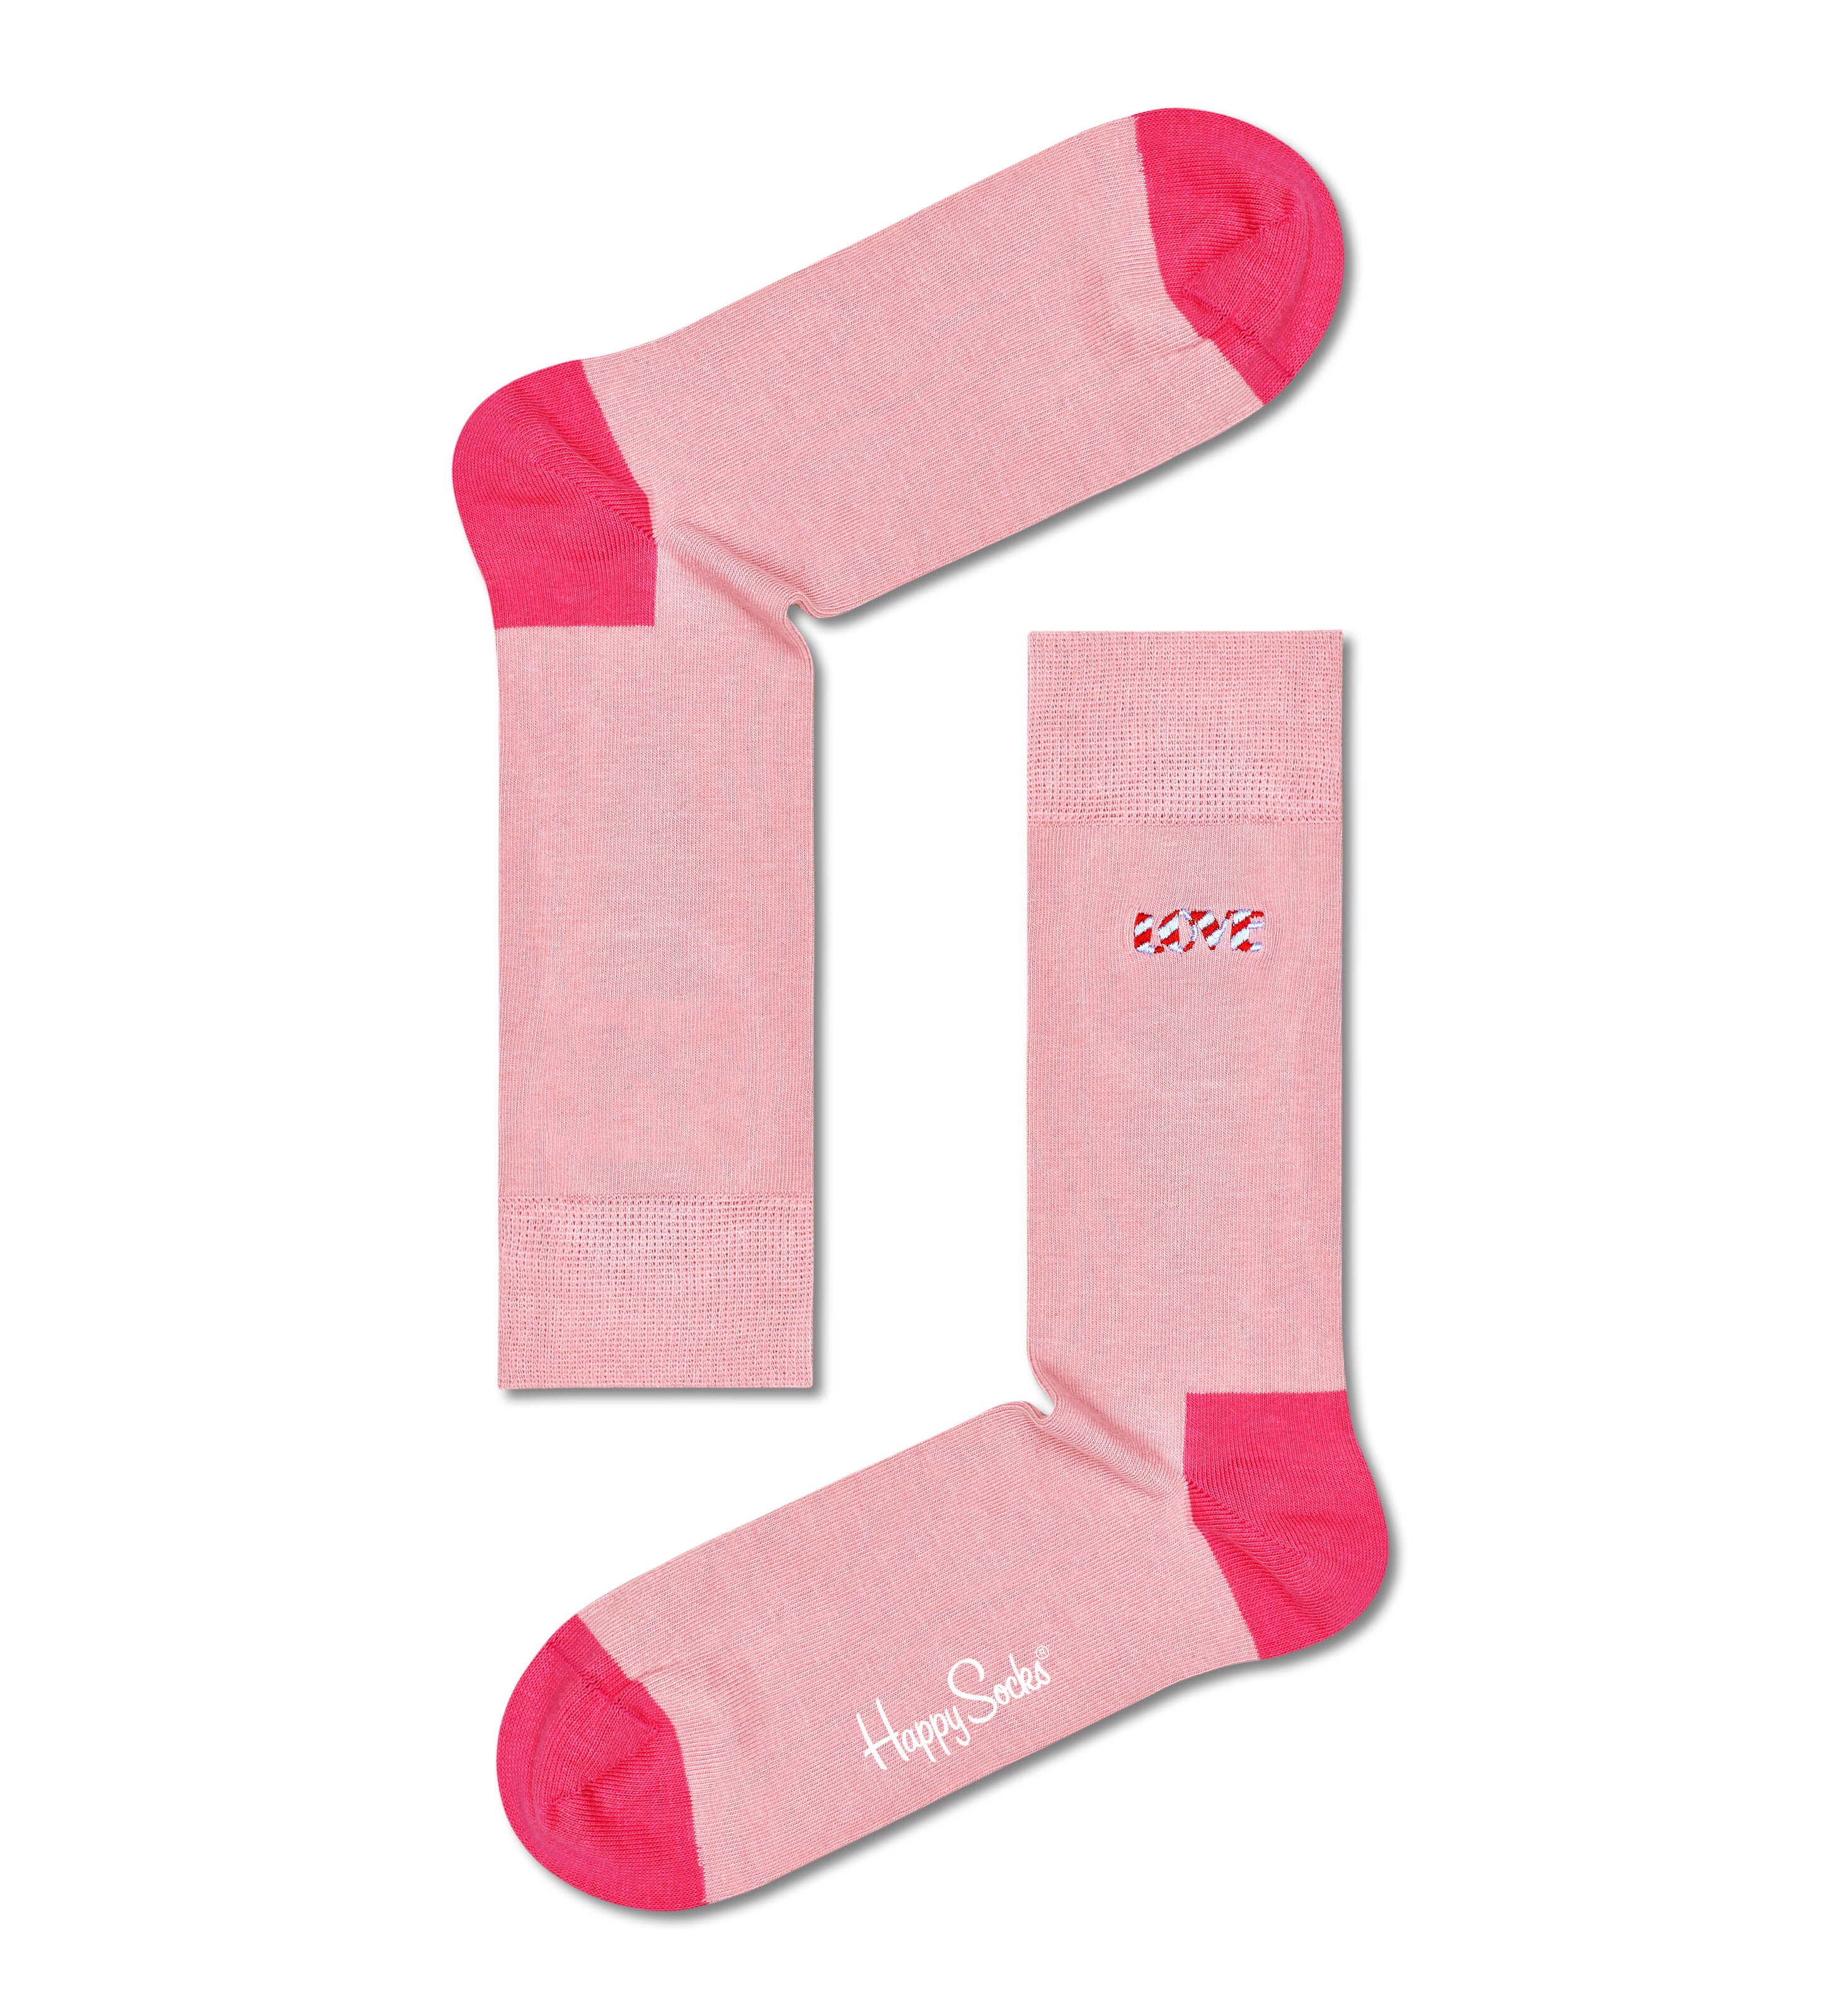 Dárkový box ponožek Happy Socks x The Beatles - 24 párů